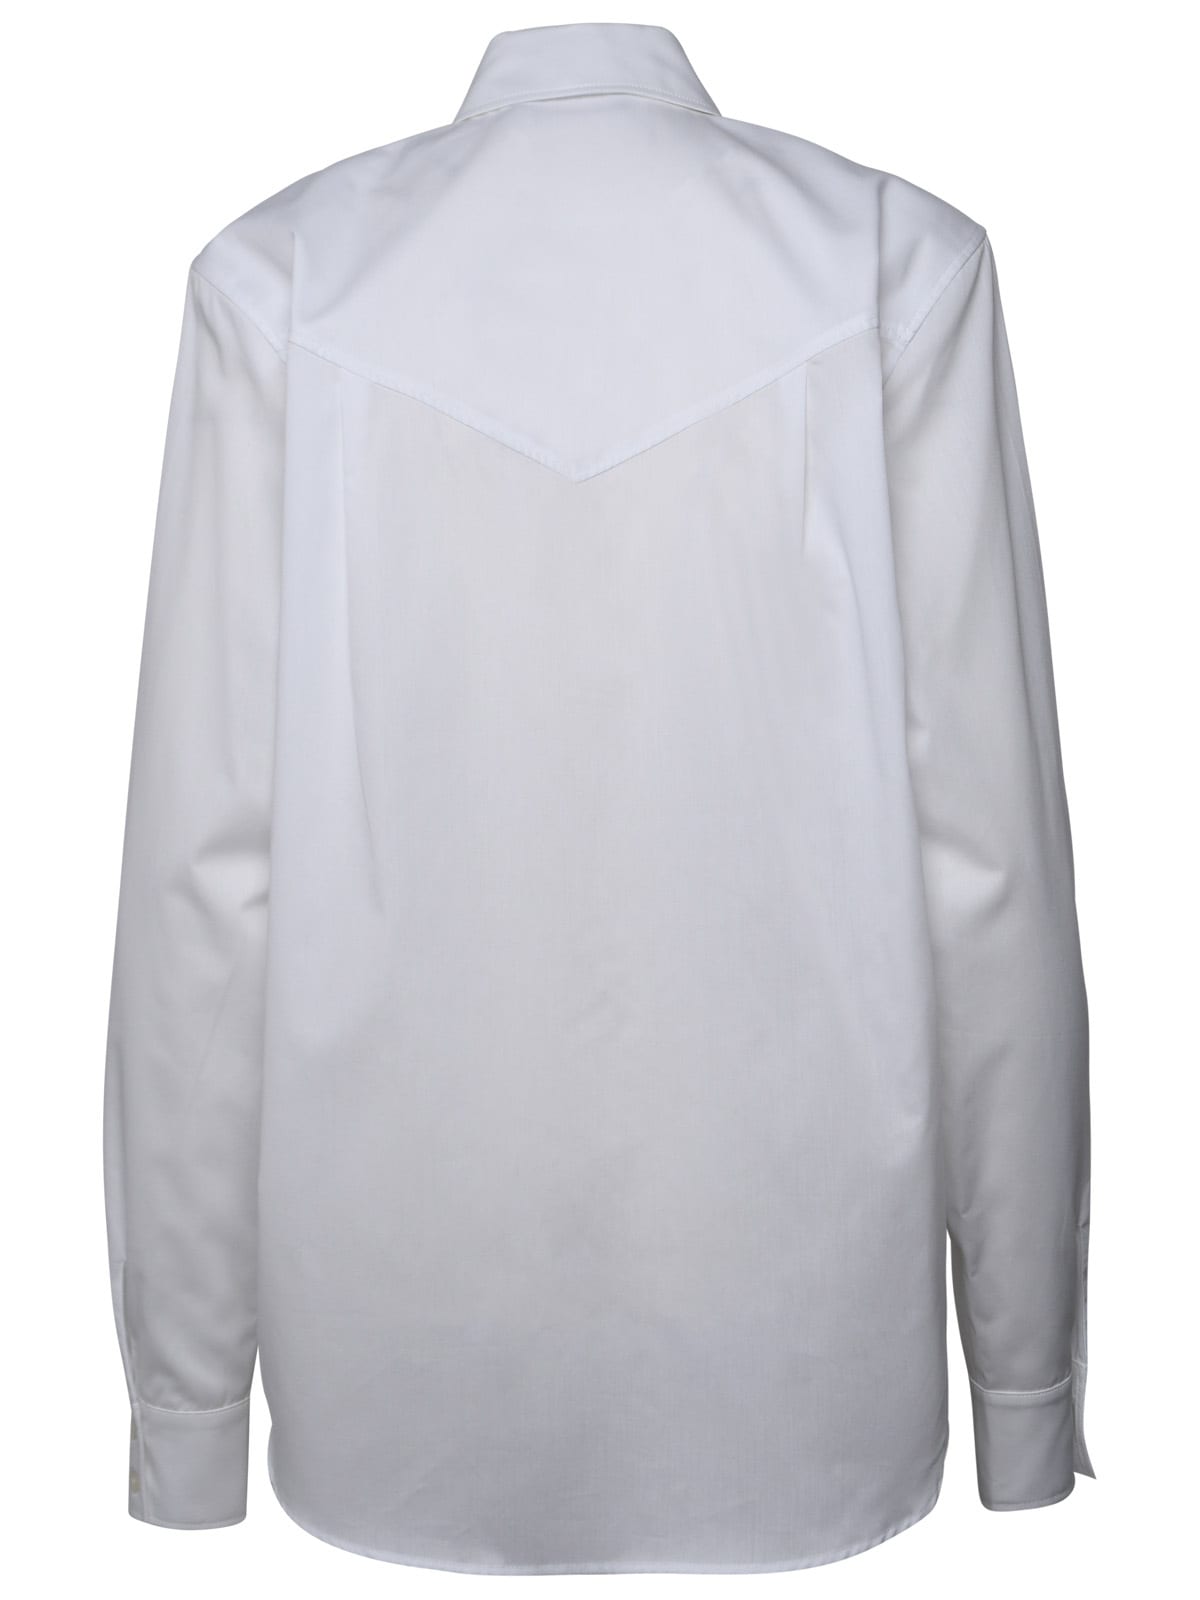 Shop The Andamane Nashville White Cotton Shirt